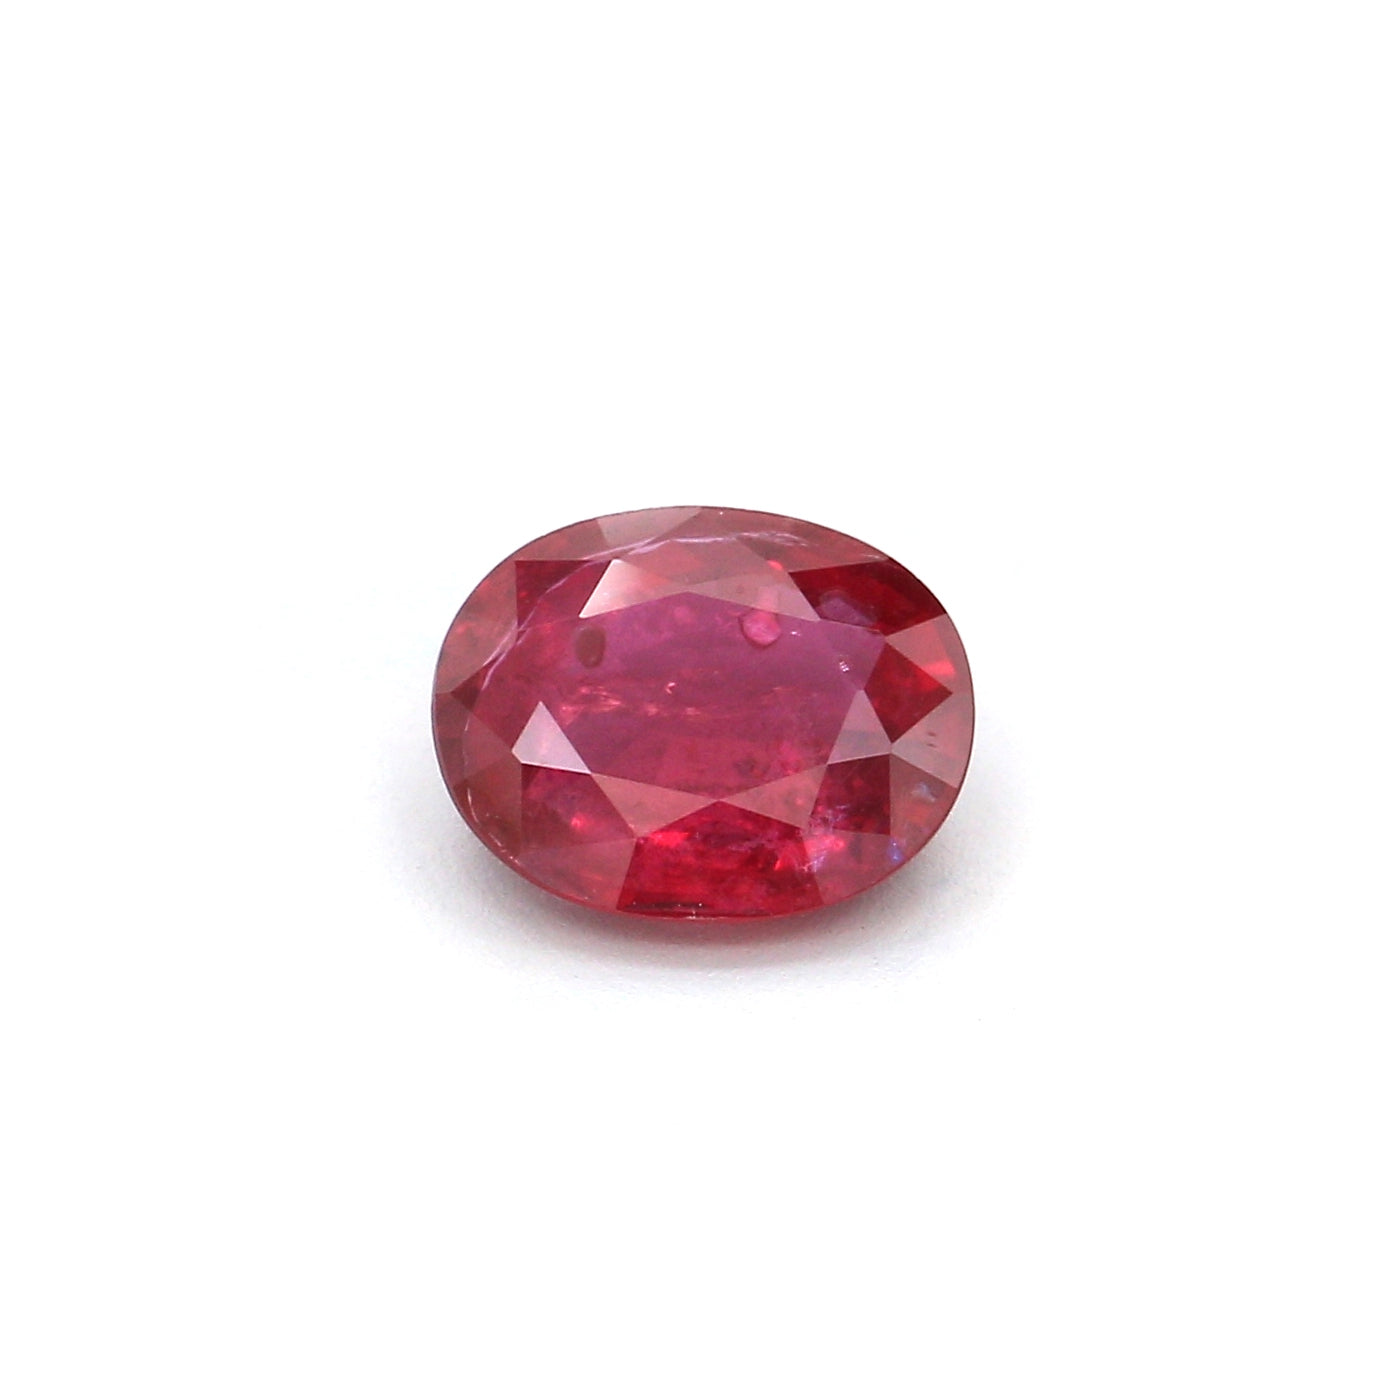 0.64ct Purplish Red, Oval Ruby, H(b), Thailand - 5.93 x 4.78 x 2.44mm